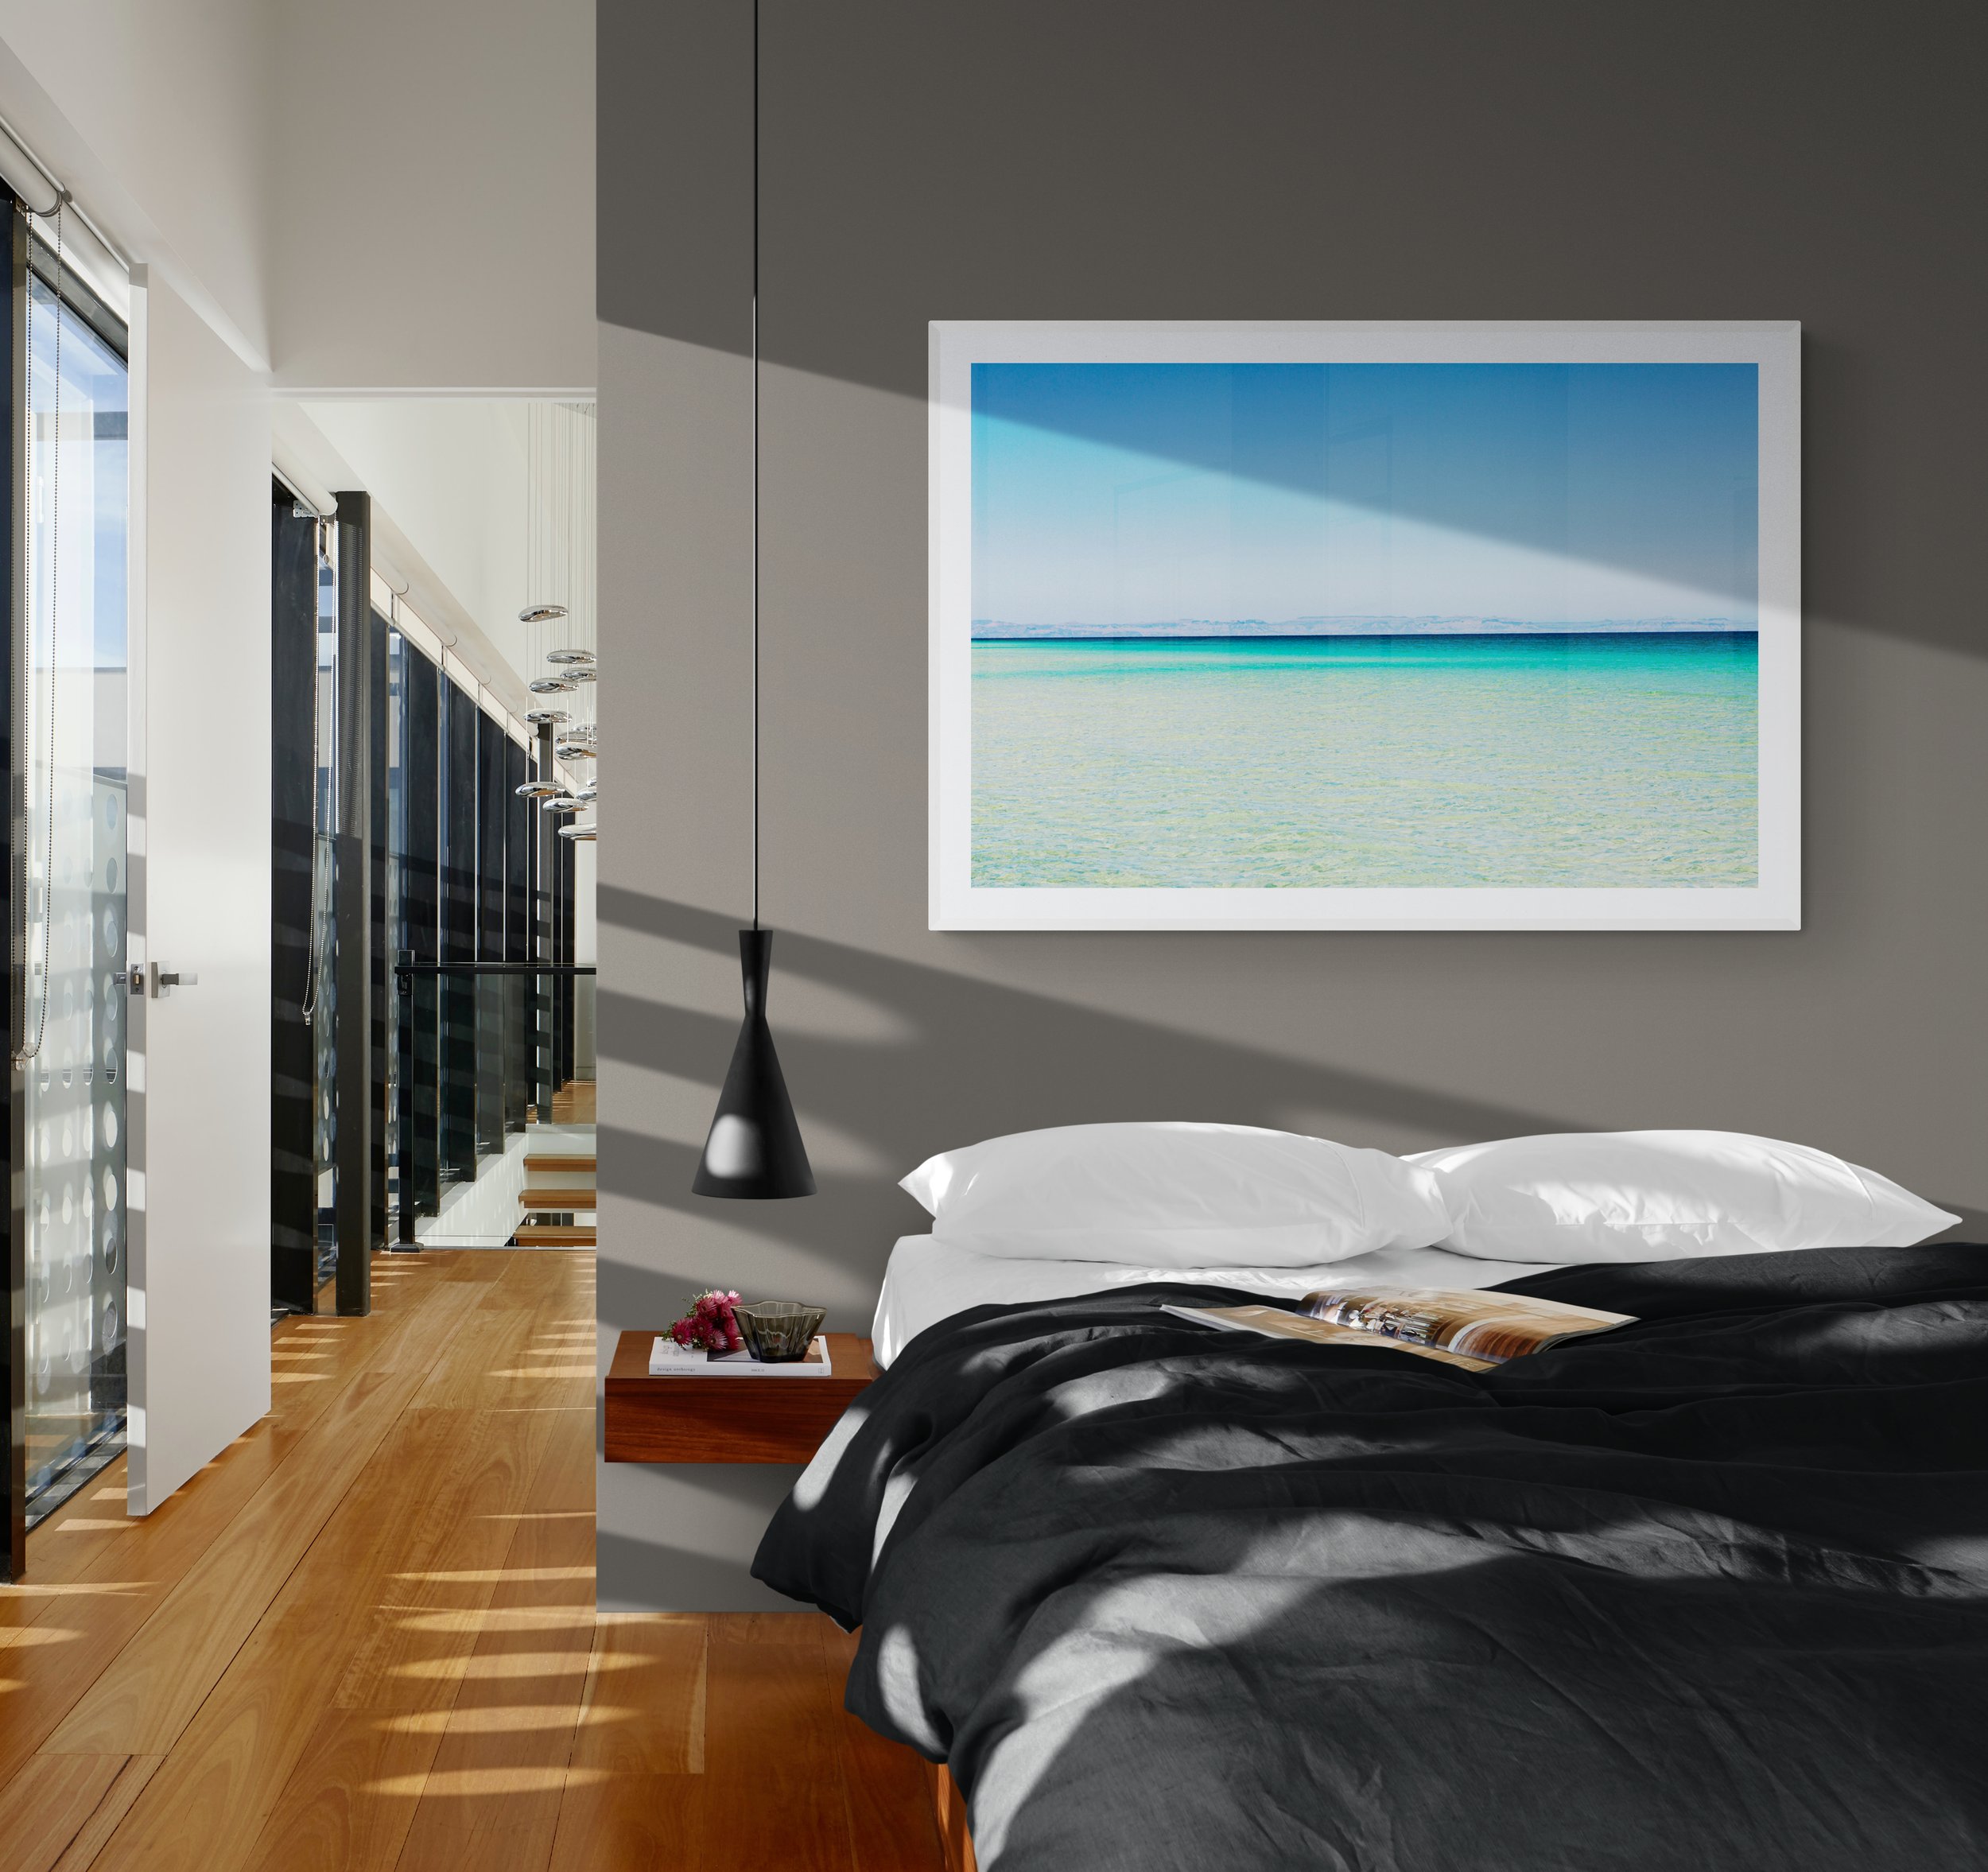 Stylish_apartment_bedroom_with_large_windows.jpg